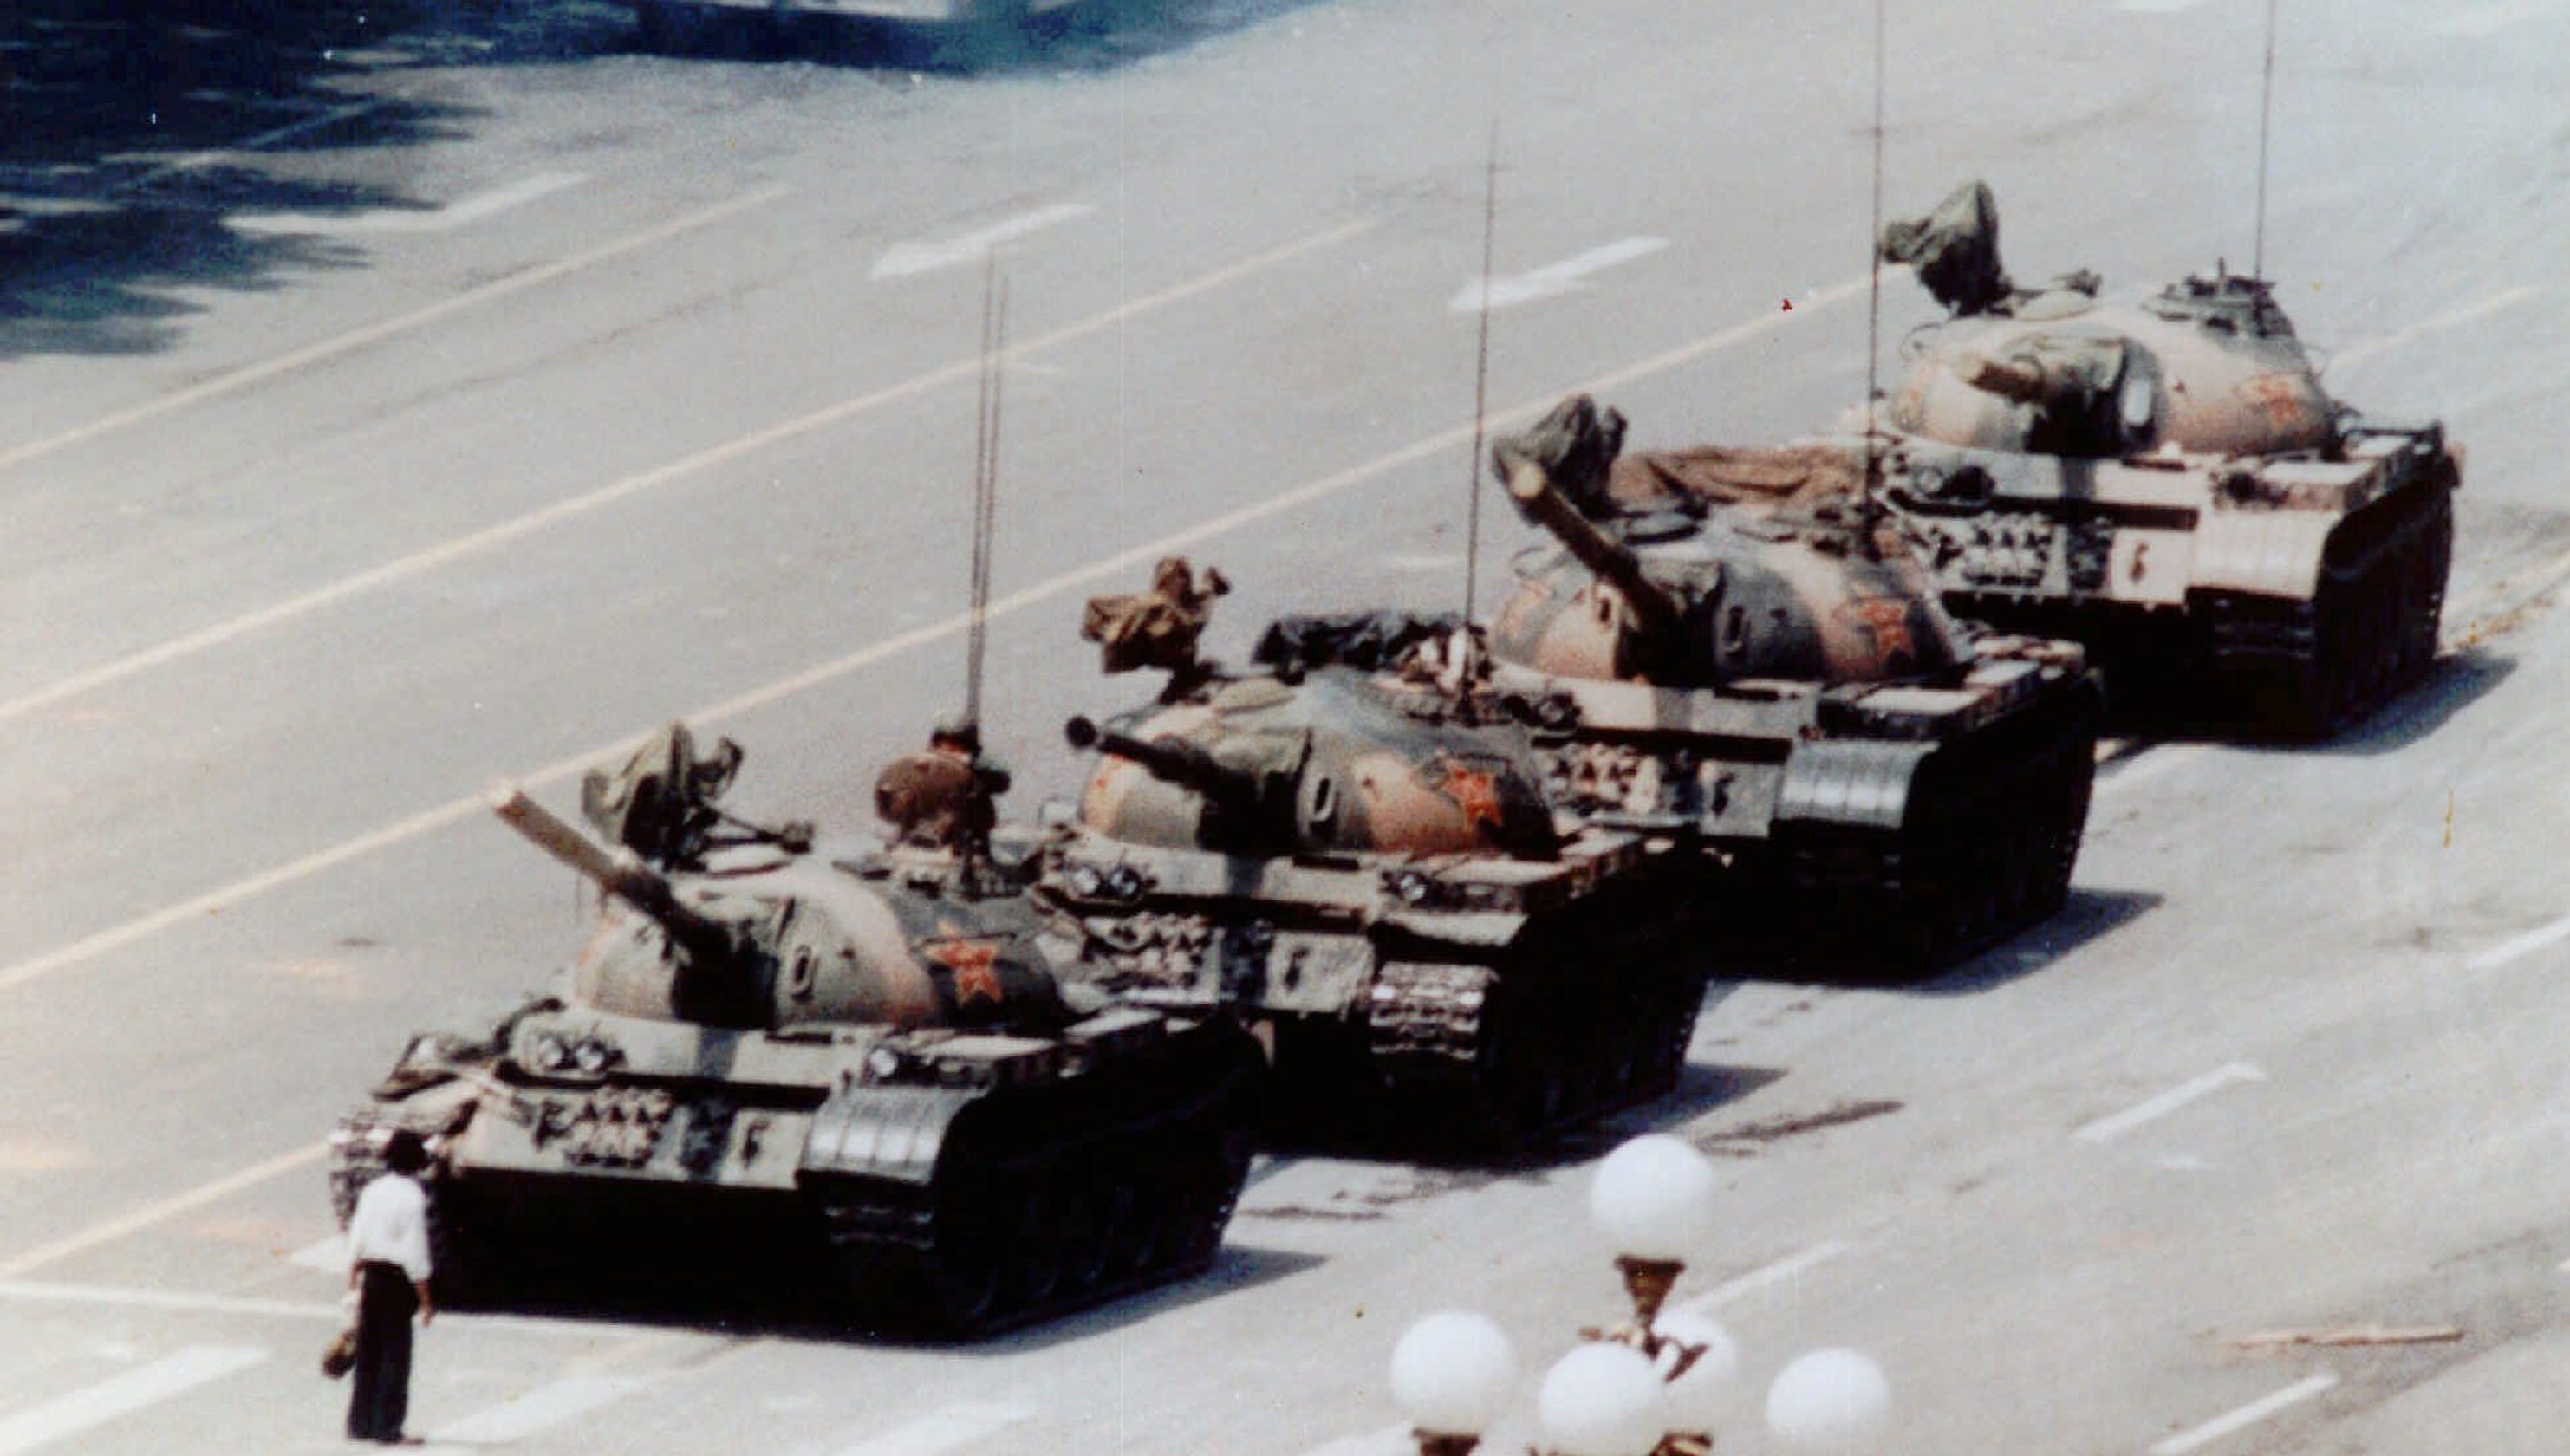 Tiananmen sq